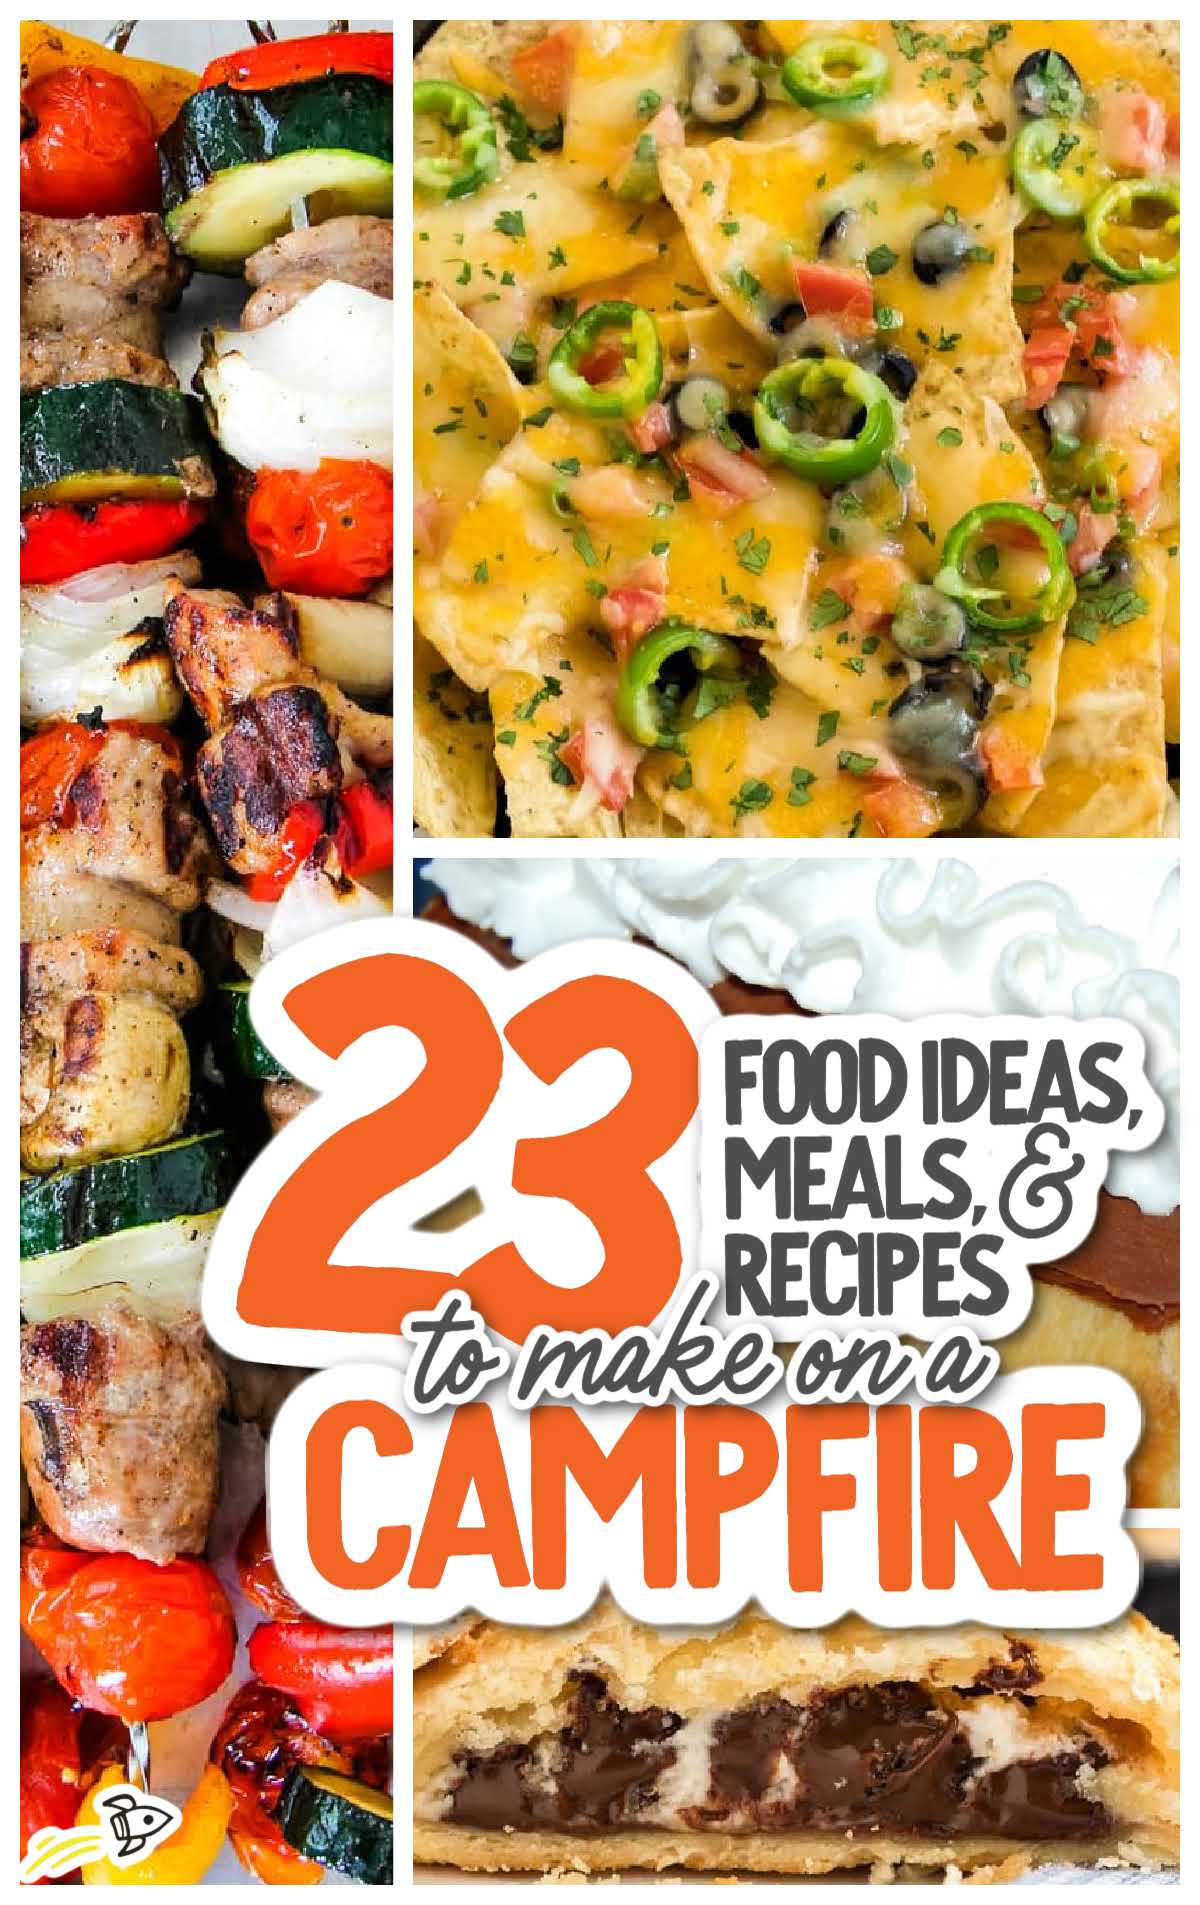 3 Delicious Campfire Sandwich Maker Recipes - Camping Food Recipes